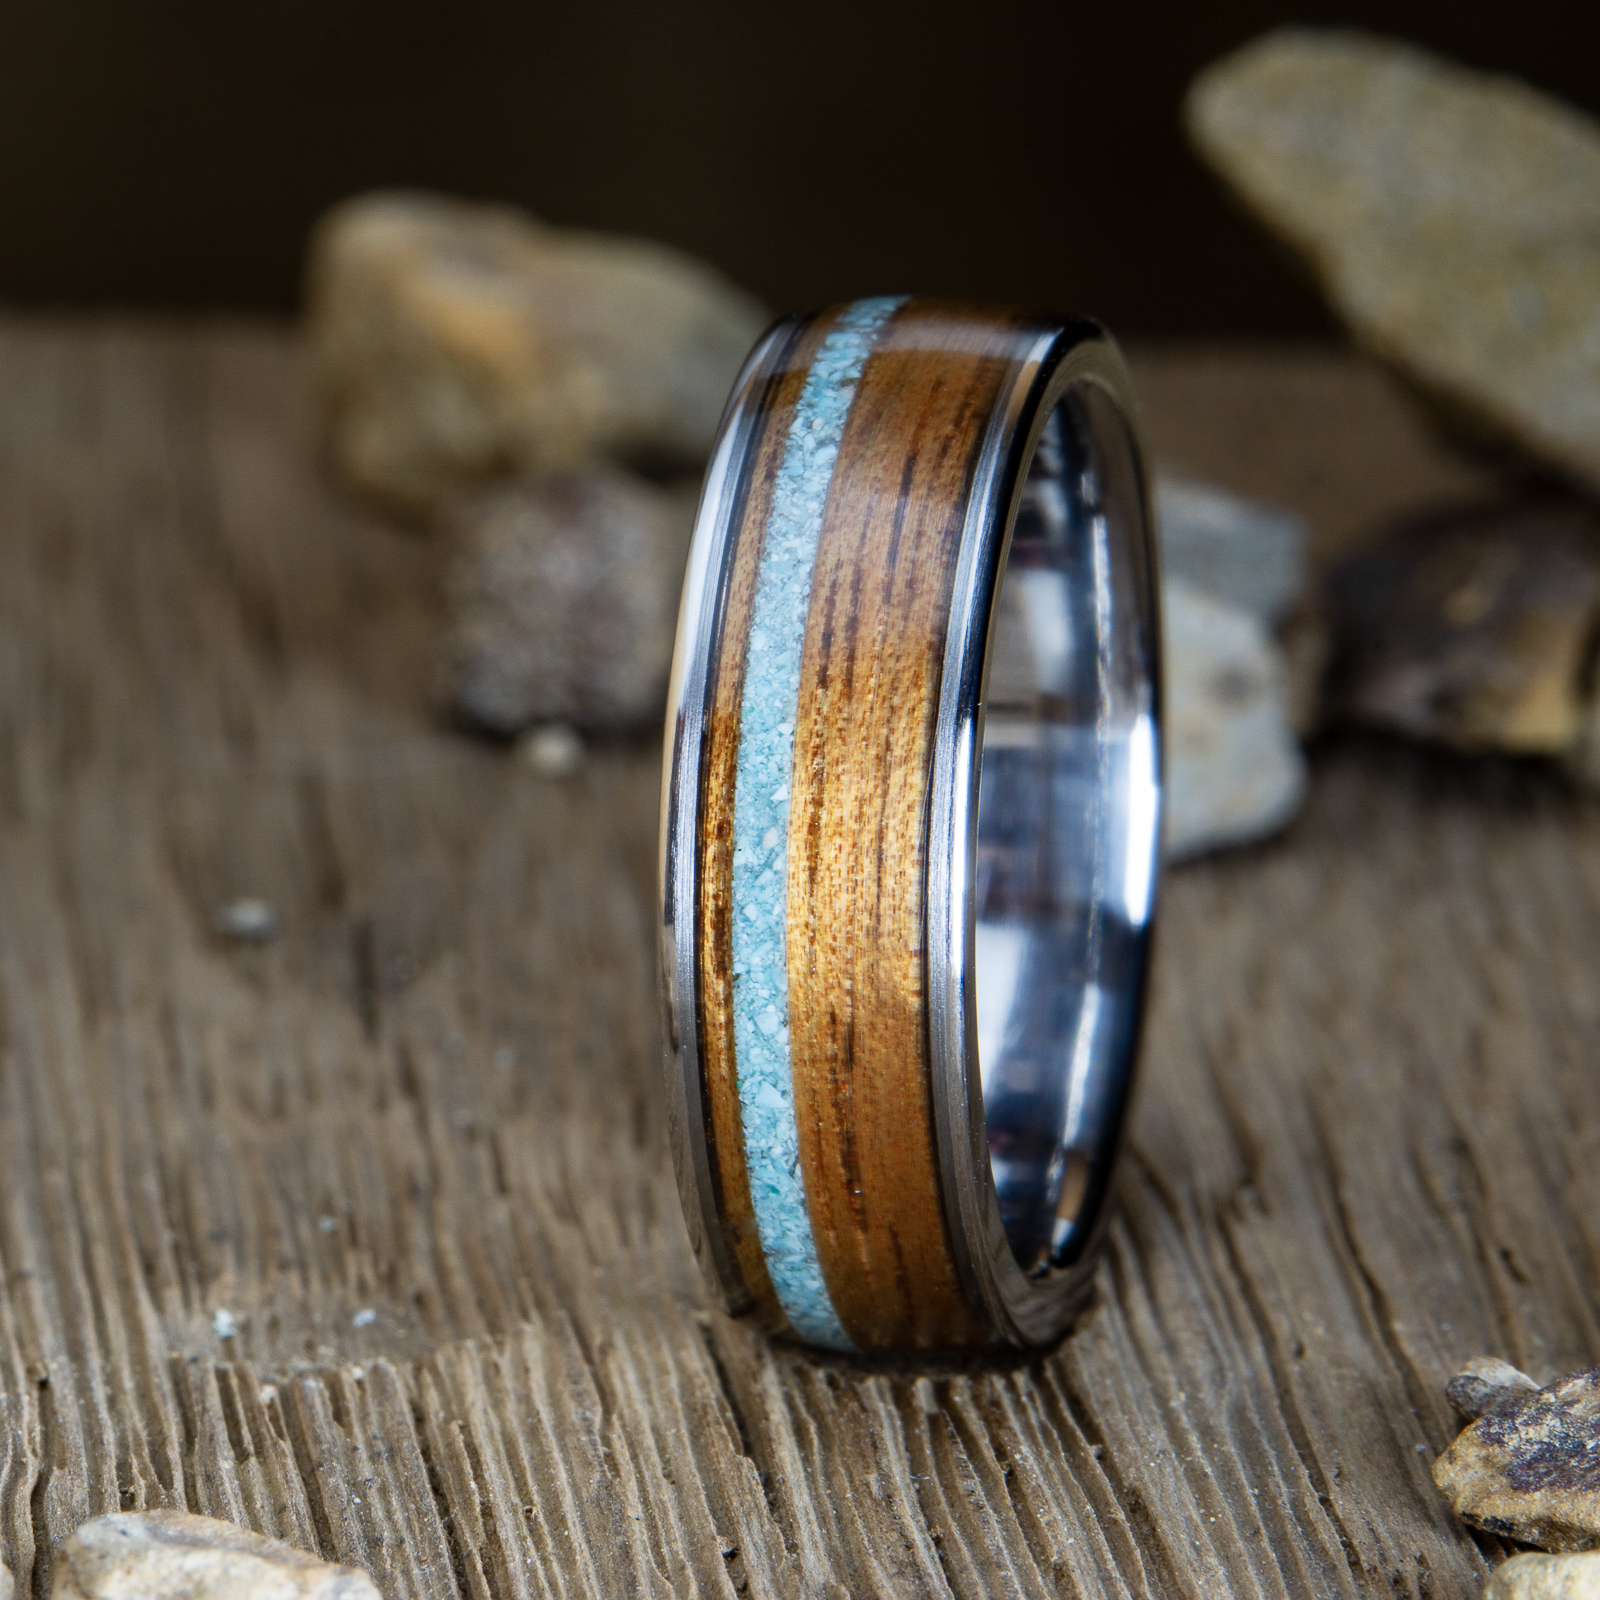 Koa wood ring with turquoise inlay